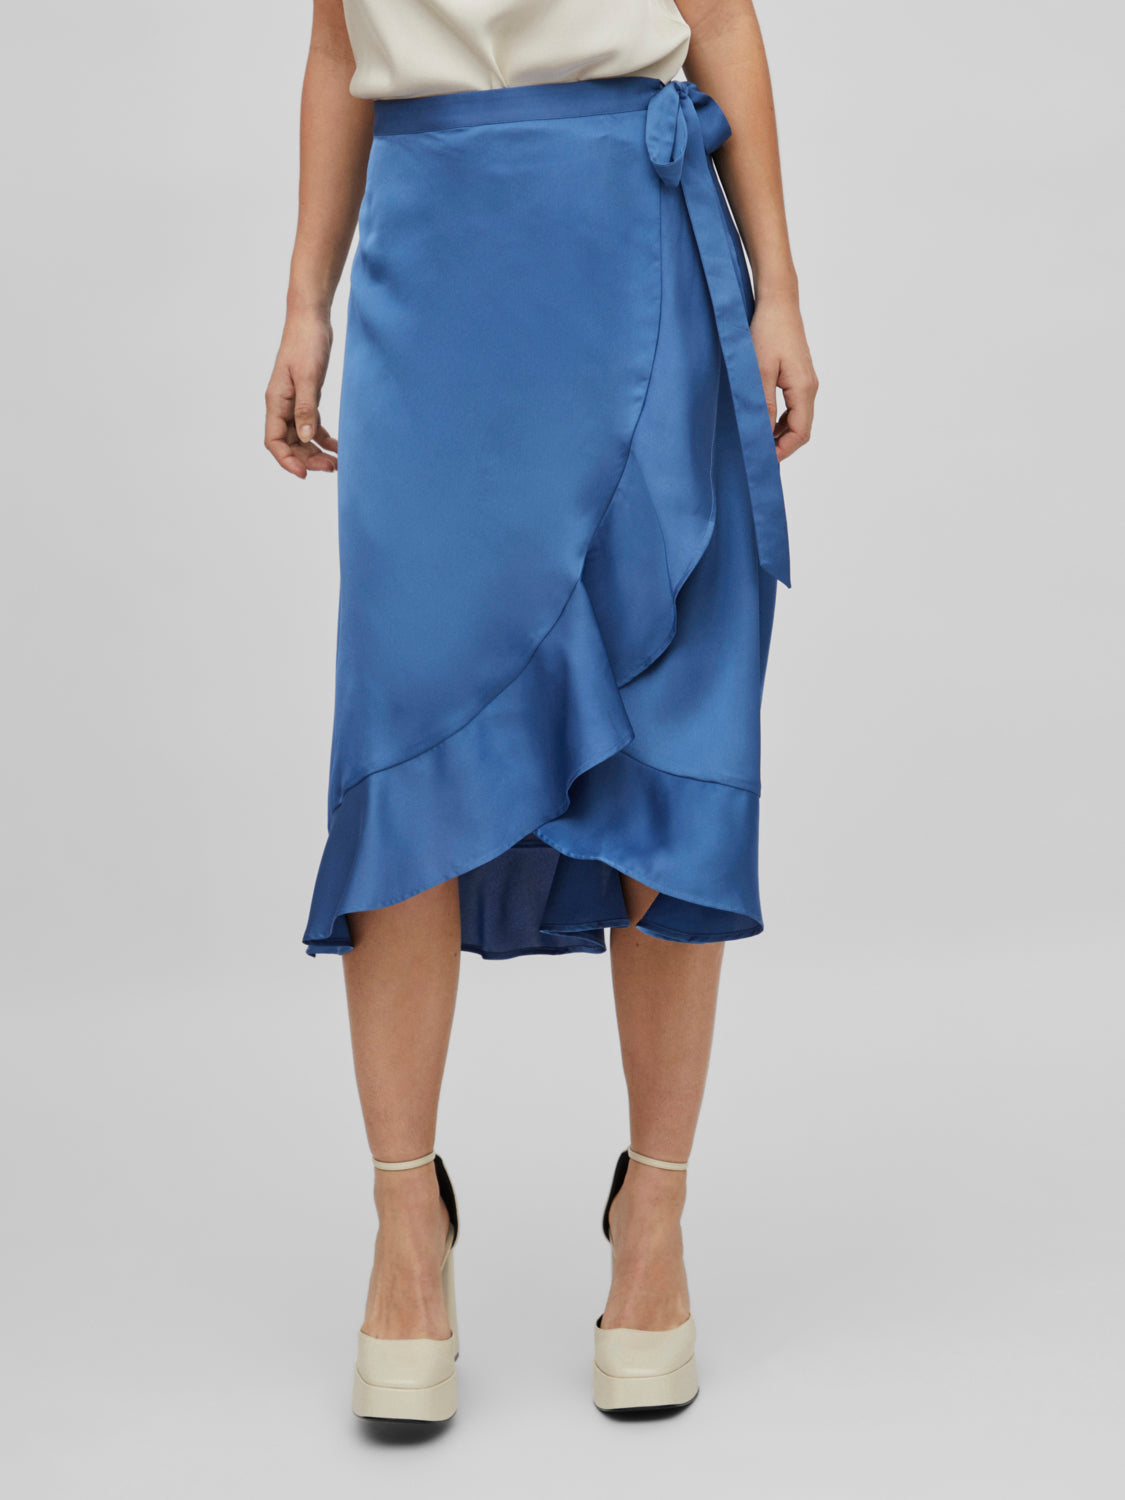 VIELLETTE Skirt - Federal Blue